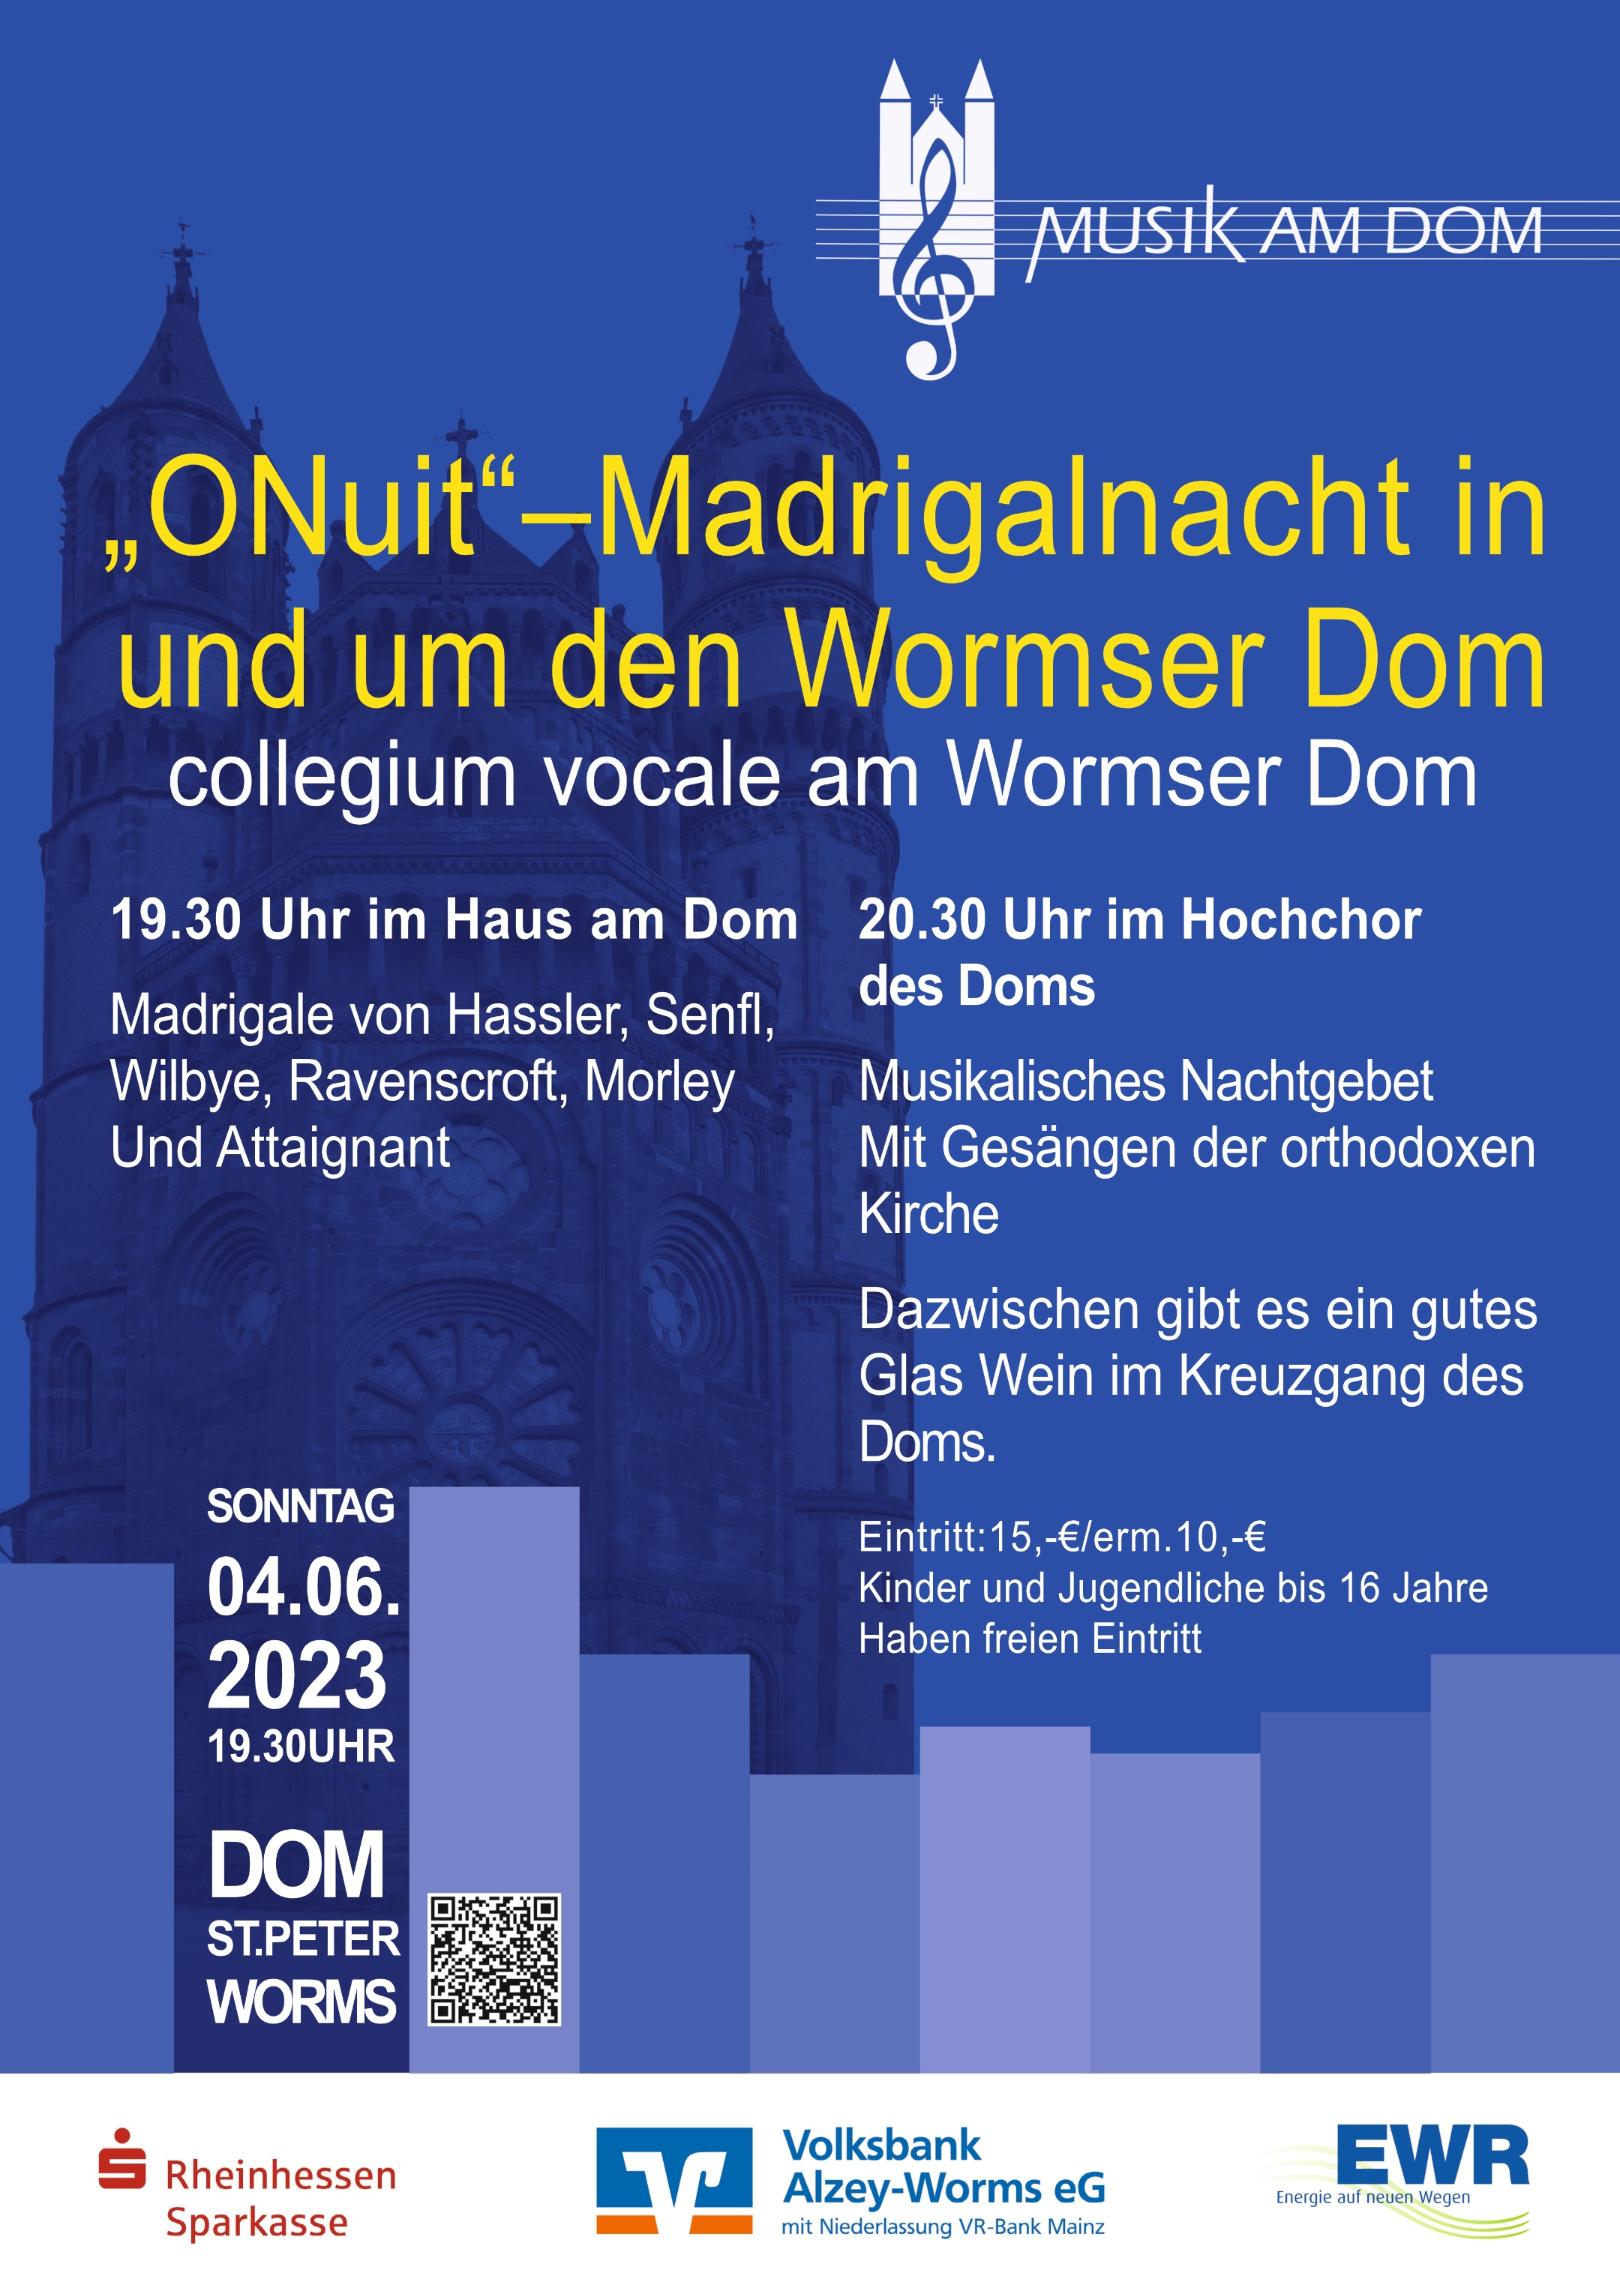 VMD_ONuit_Juni23_A3 (c) Verein Musik am Dom